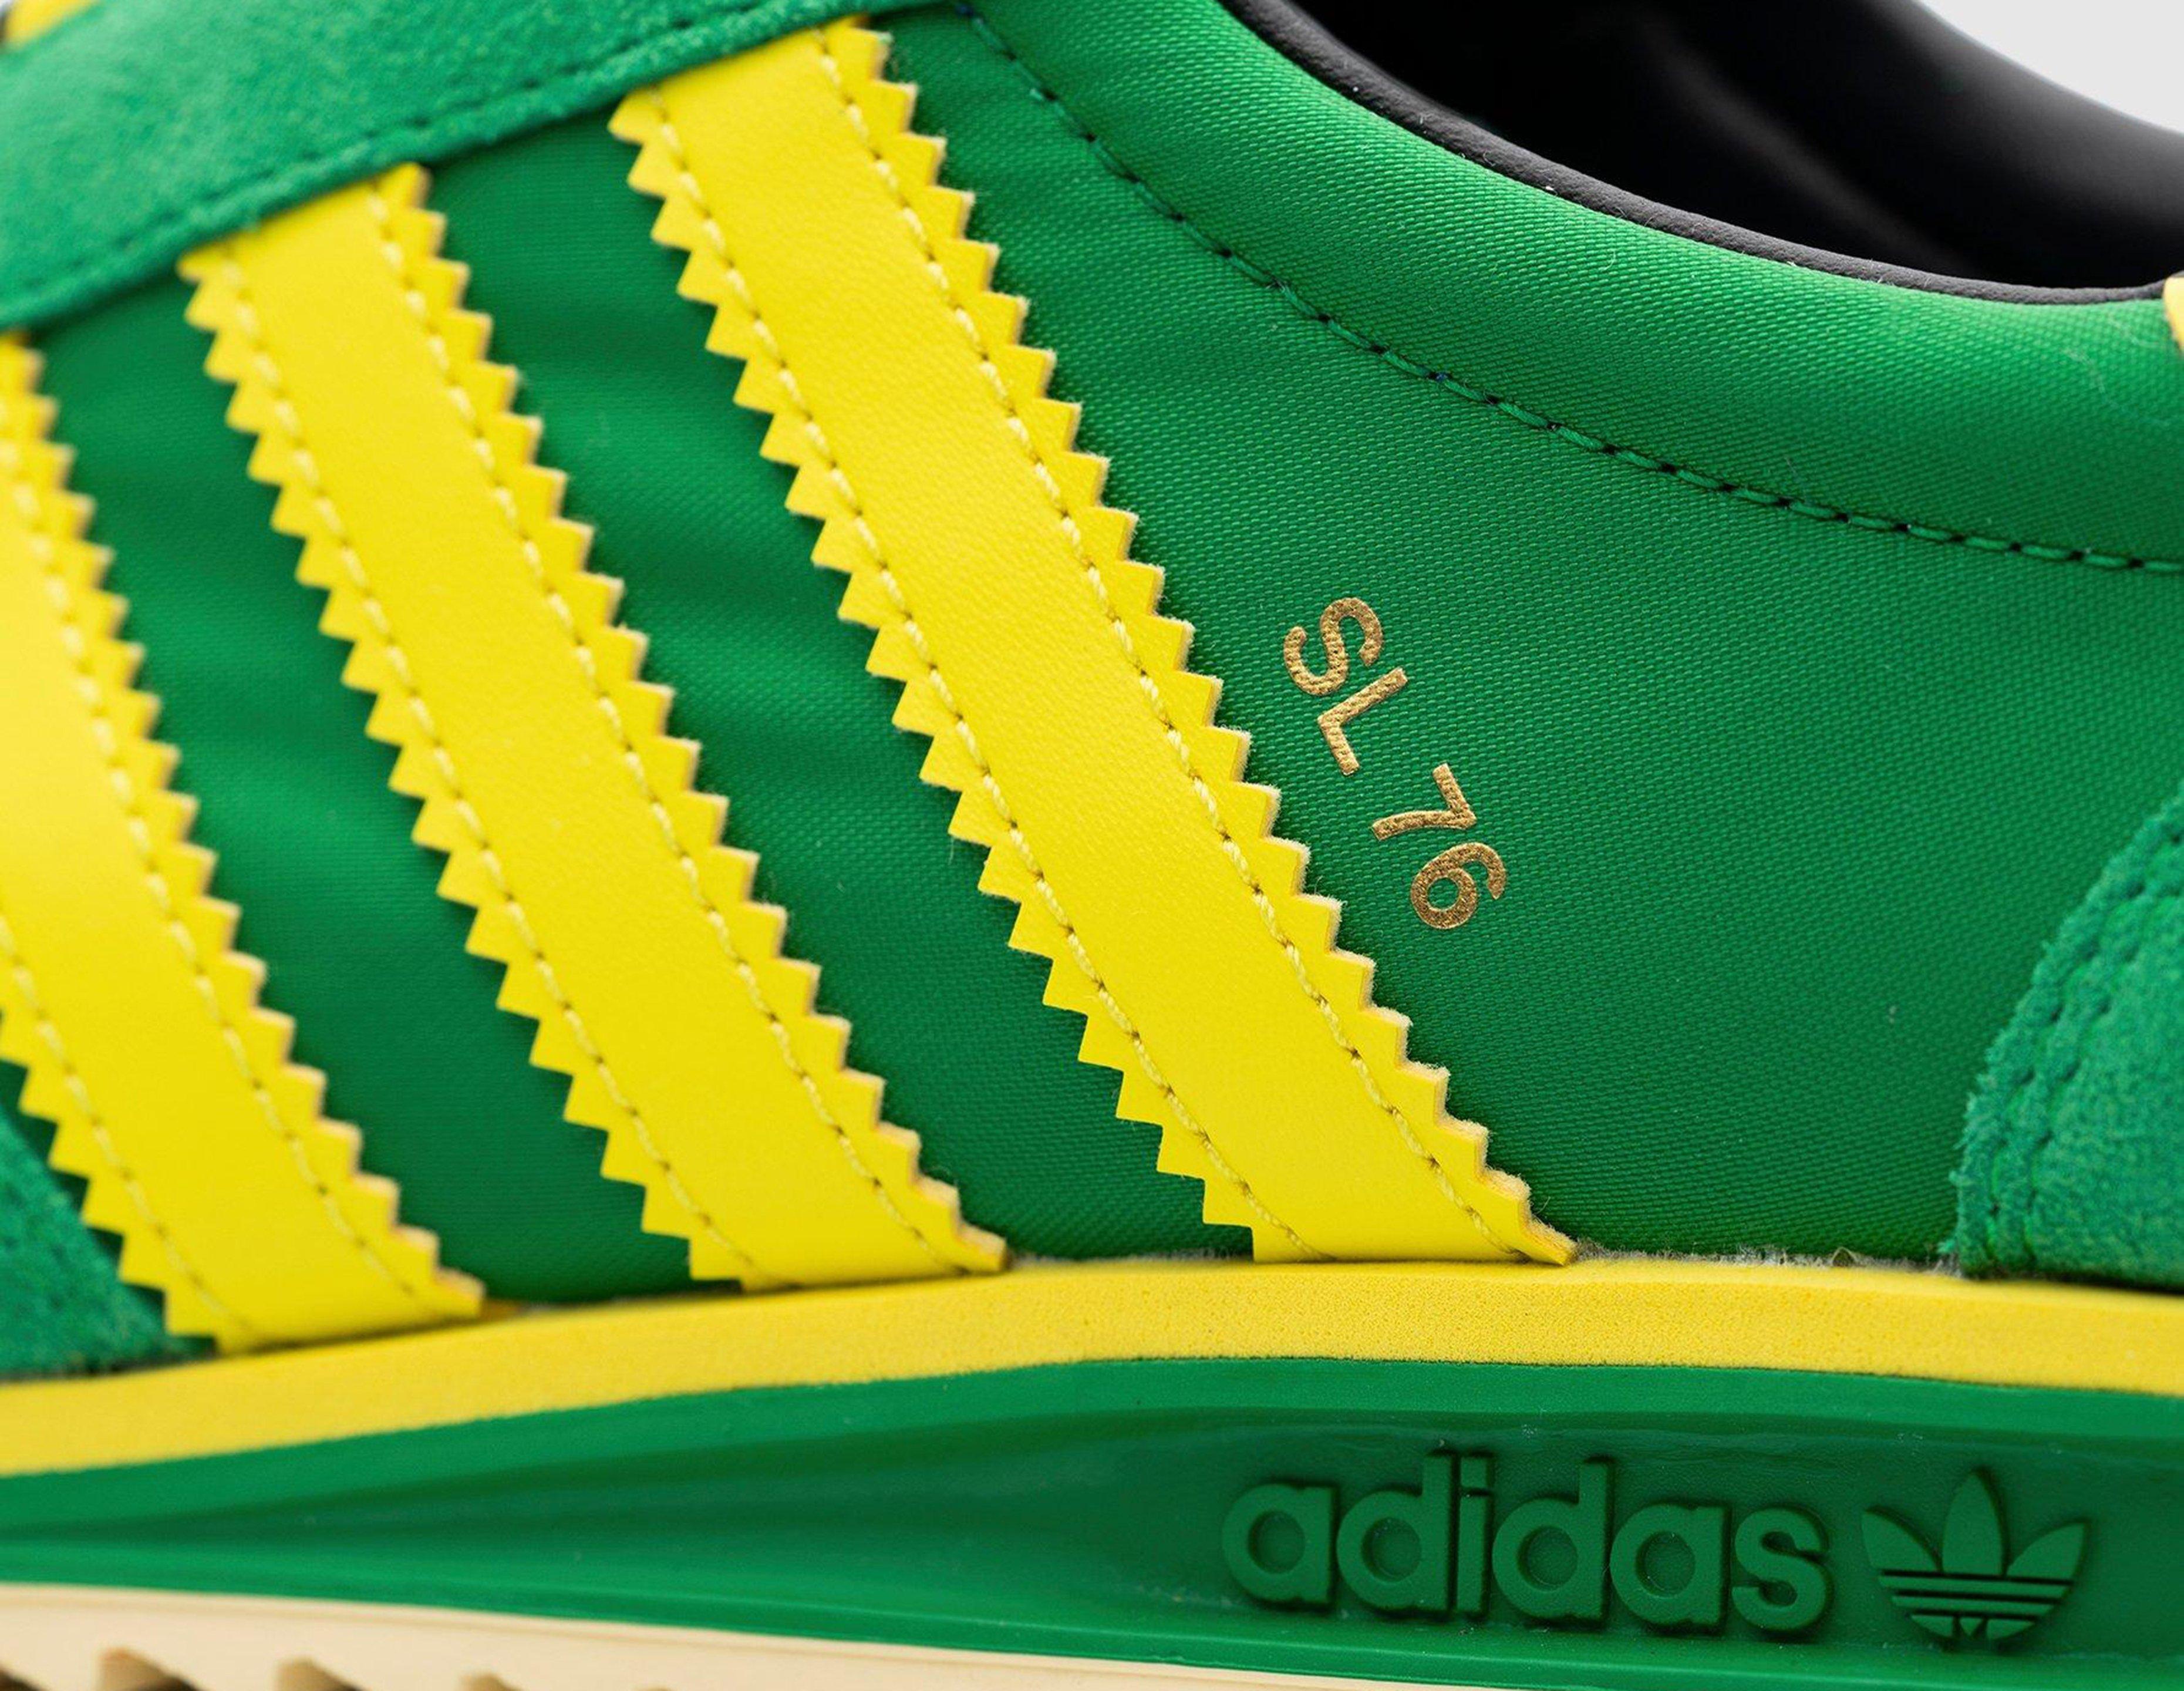 adidas sl76 green and yellow